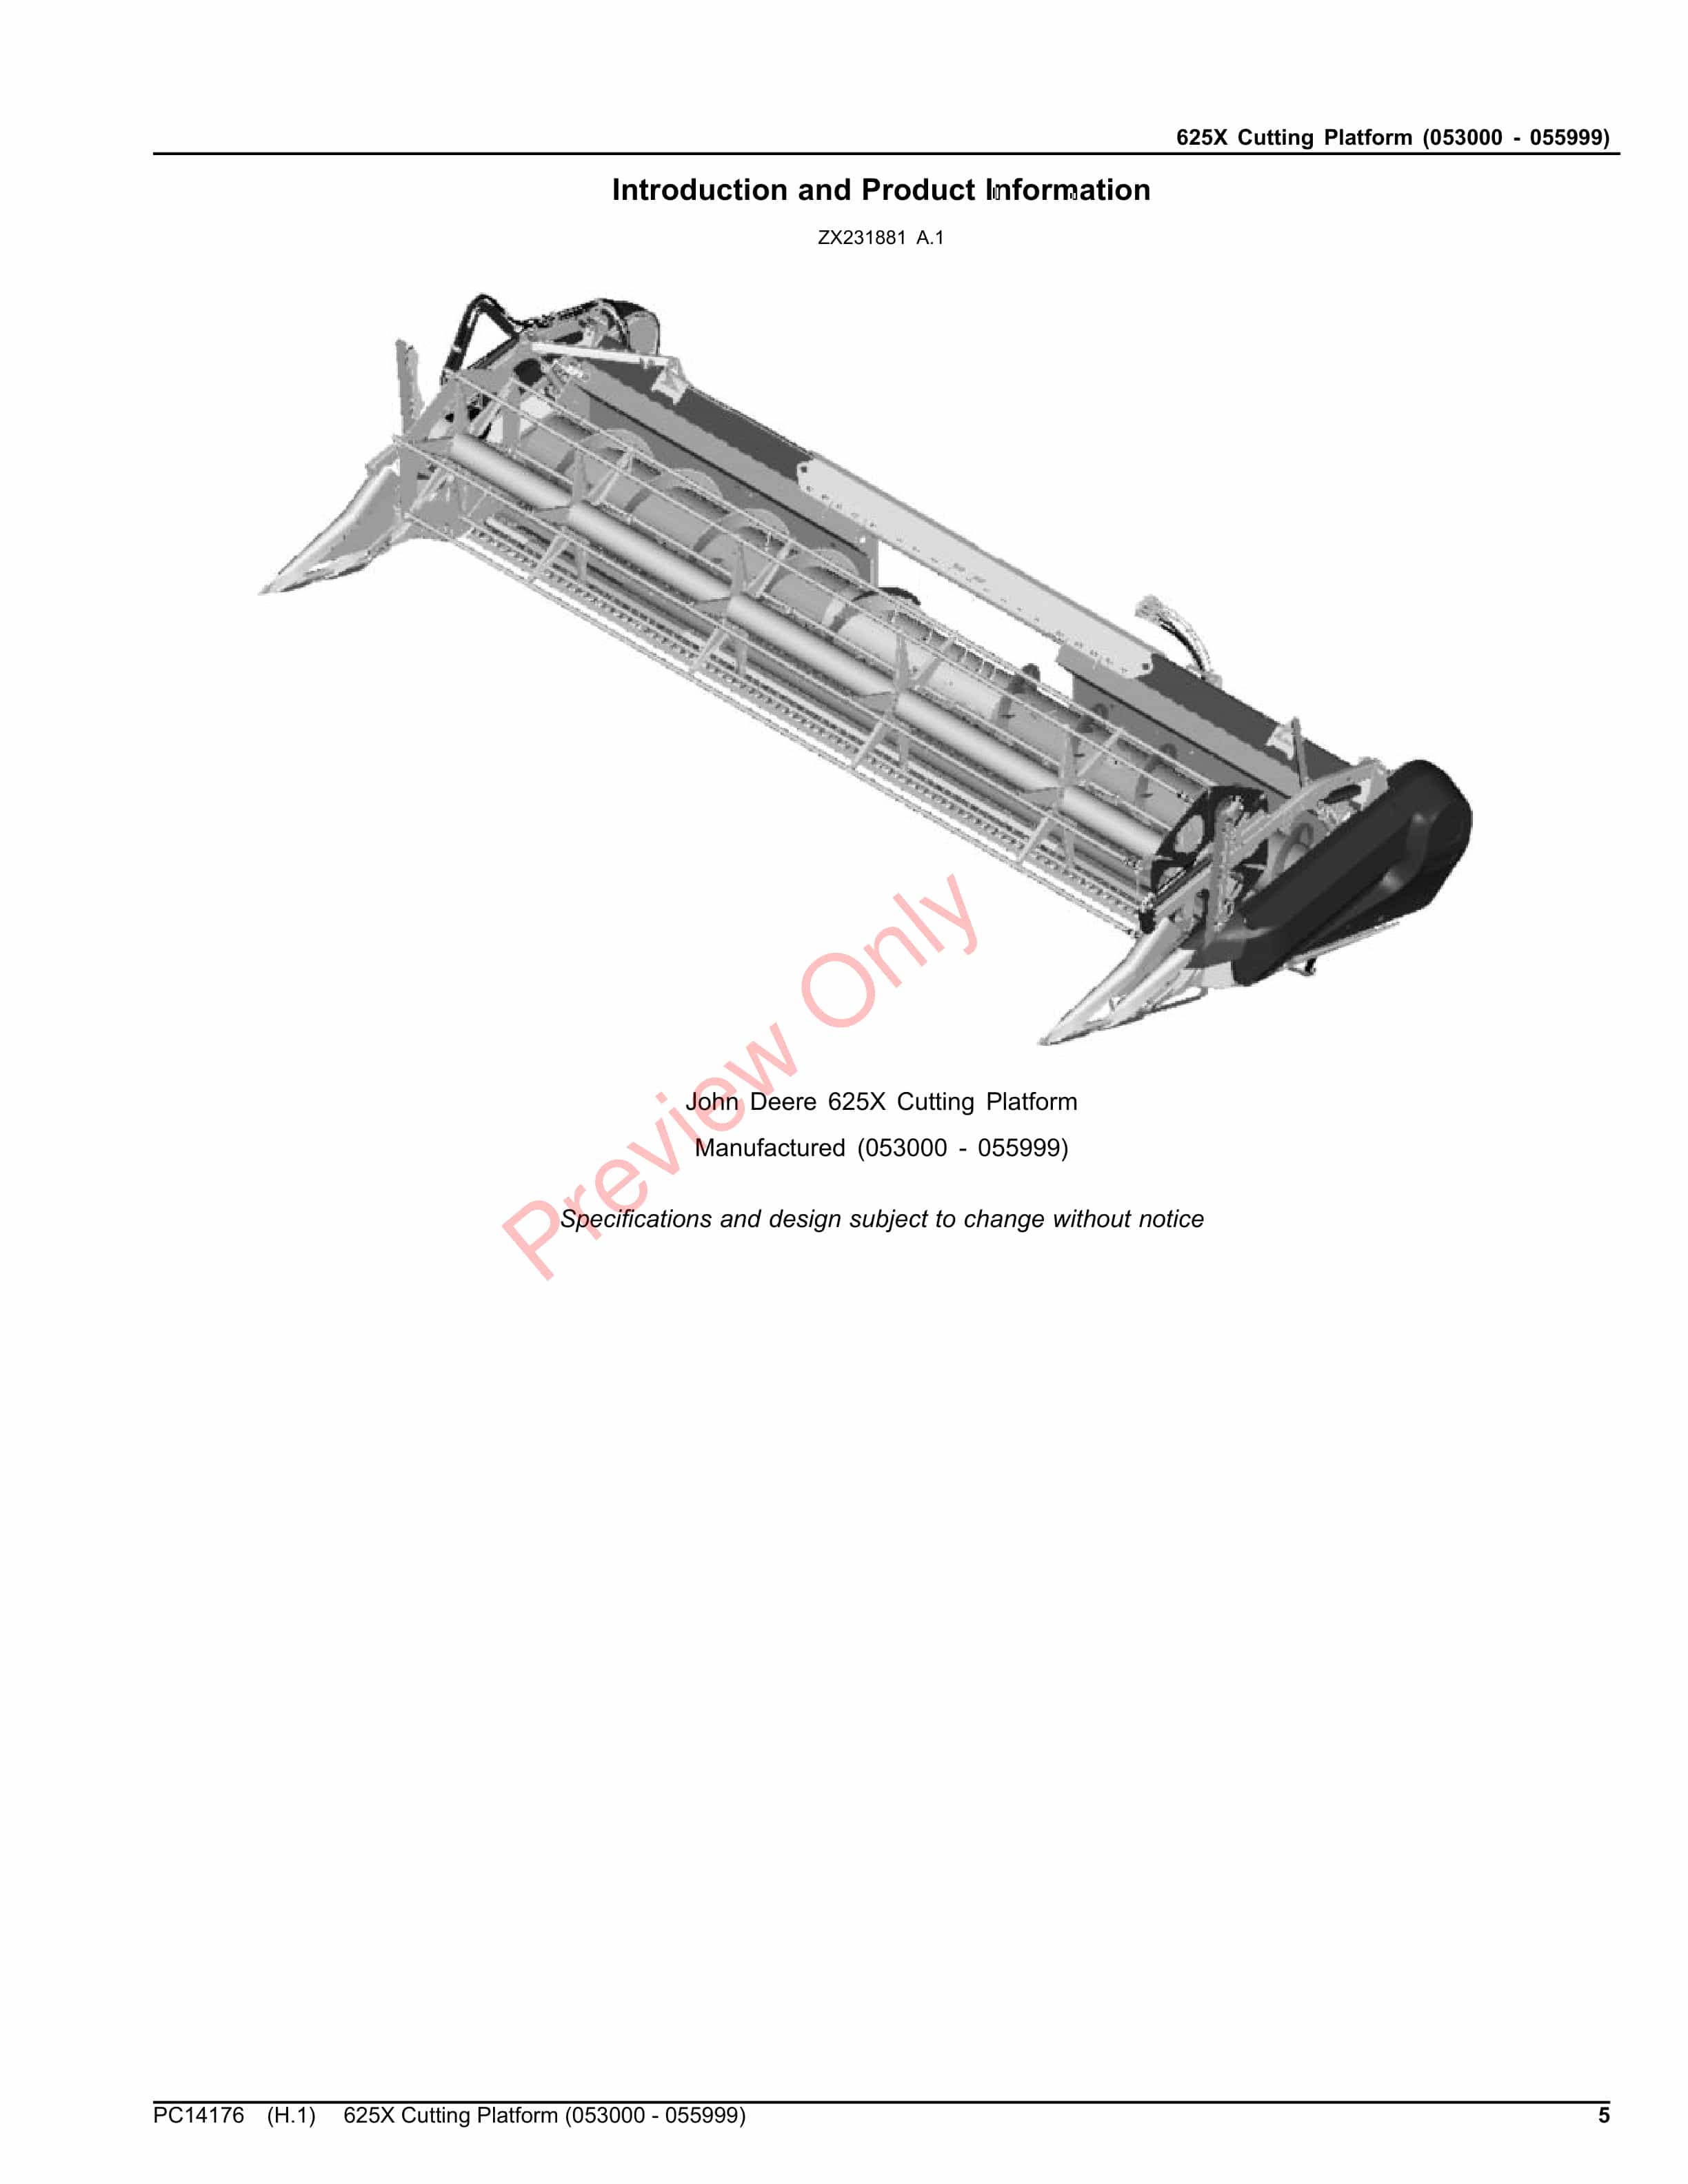 John Deere 625X Cutting Platform (053000 &#8211; 055999) Parts Catalog PC14176 12APR22-5